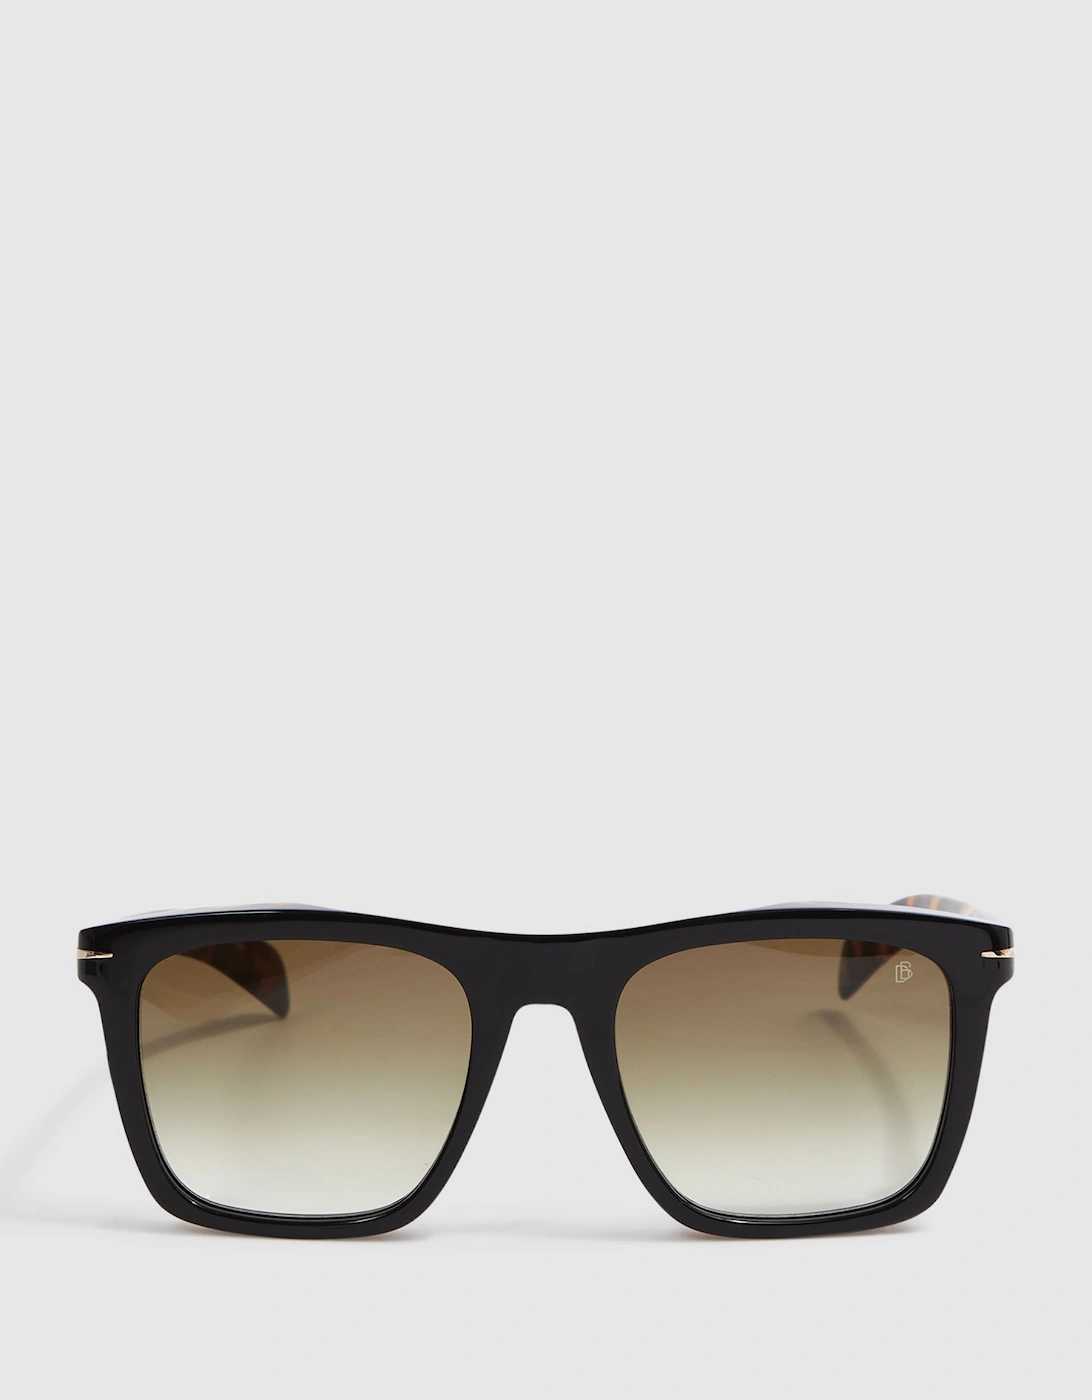 Eyewear by David Beckham Squared Tortoiseshell Sunglasses, 2 of 1